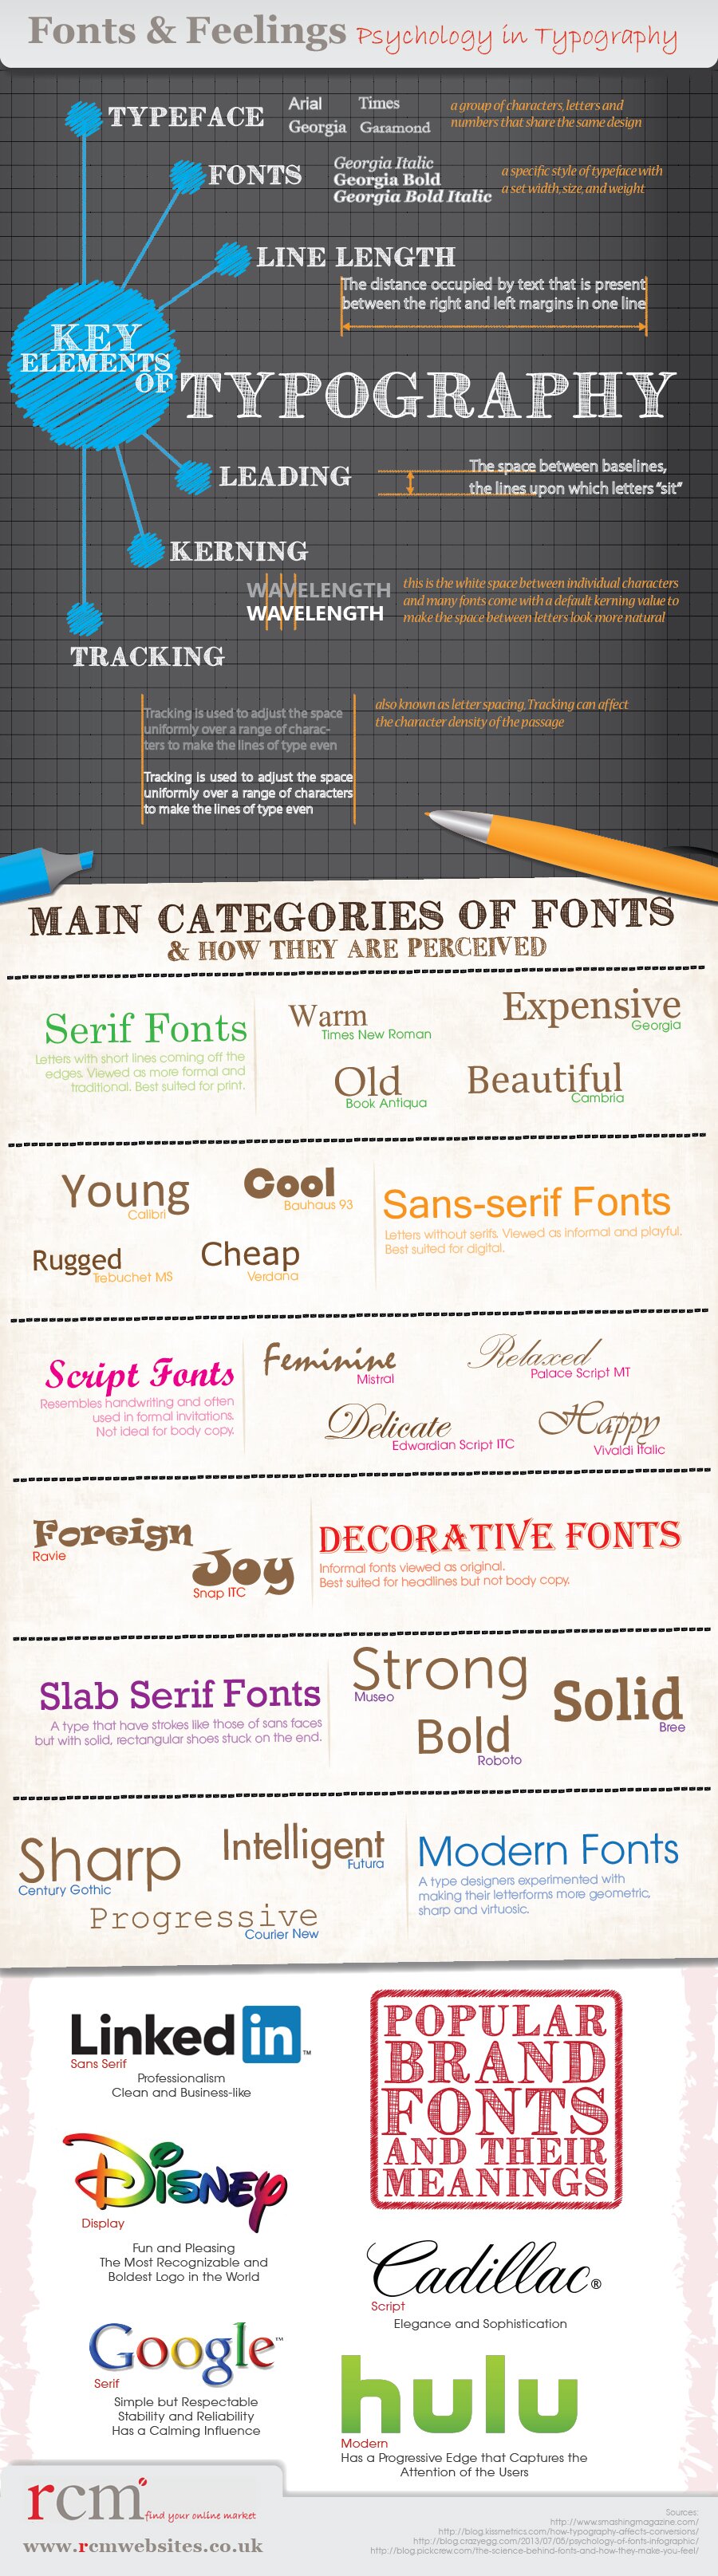 Fonts & Feelings Psychology in Typography 